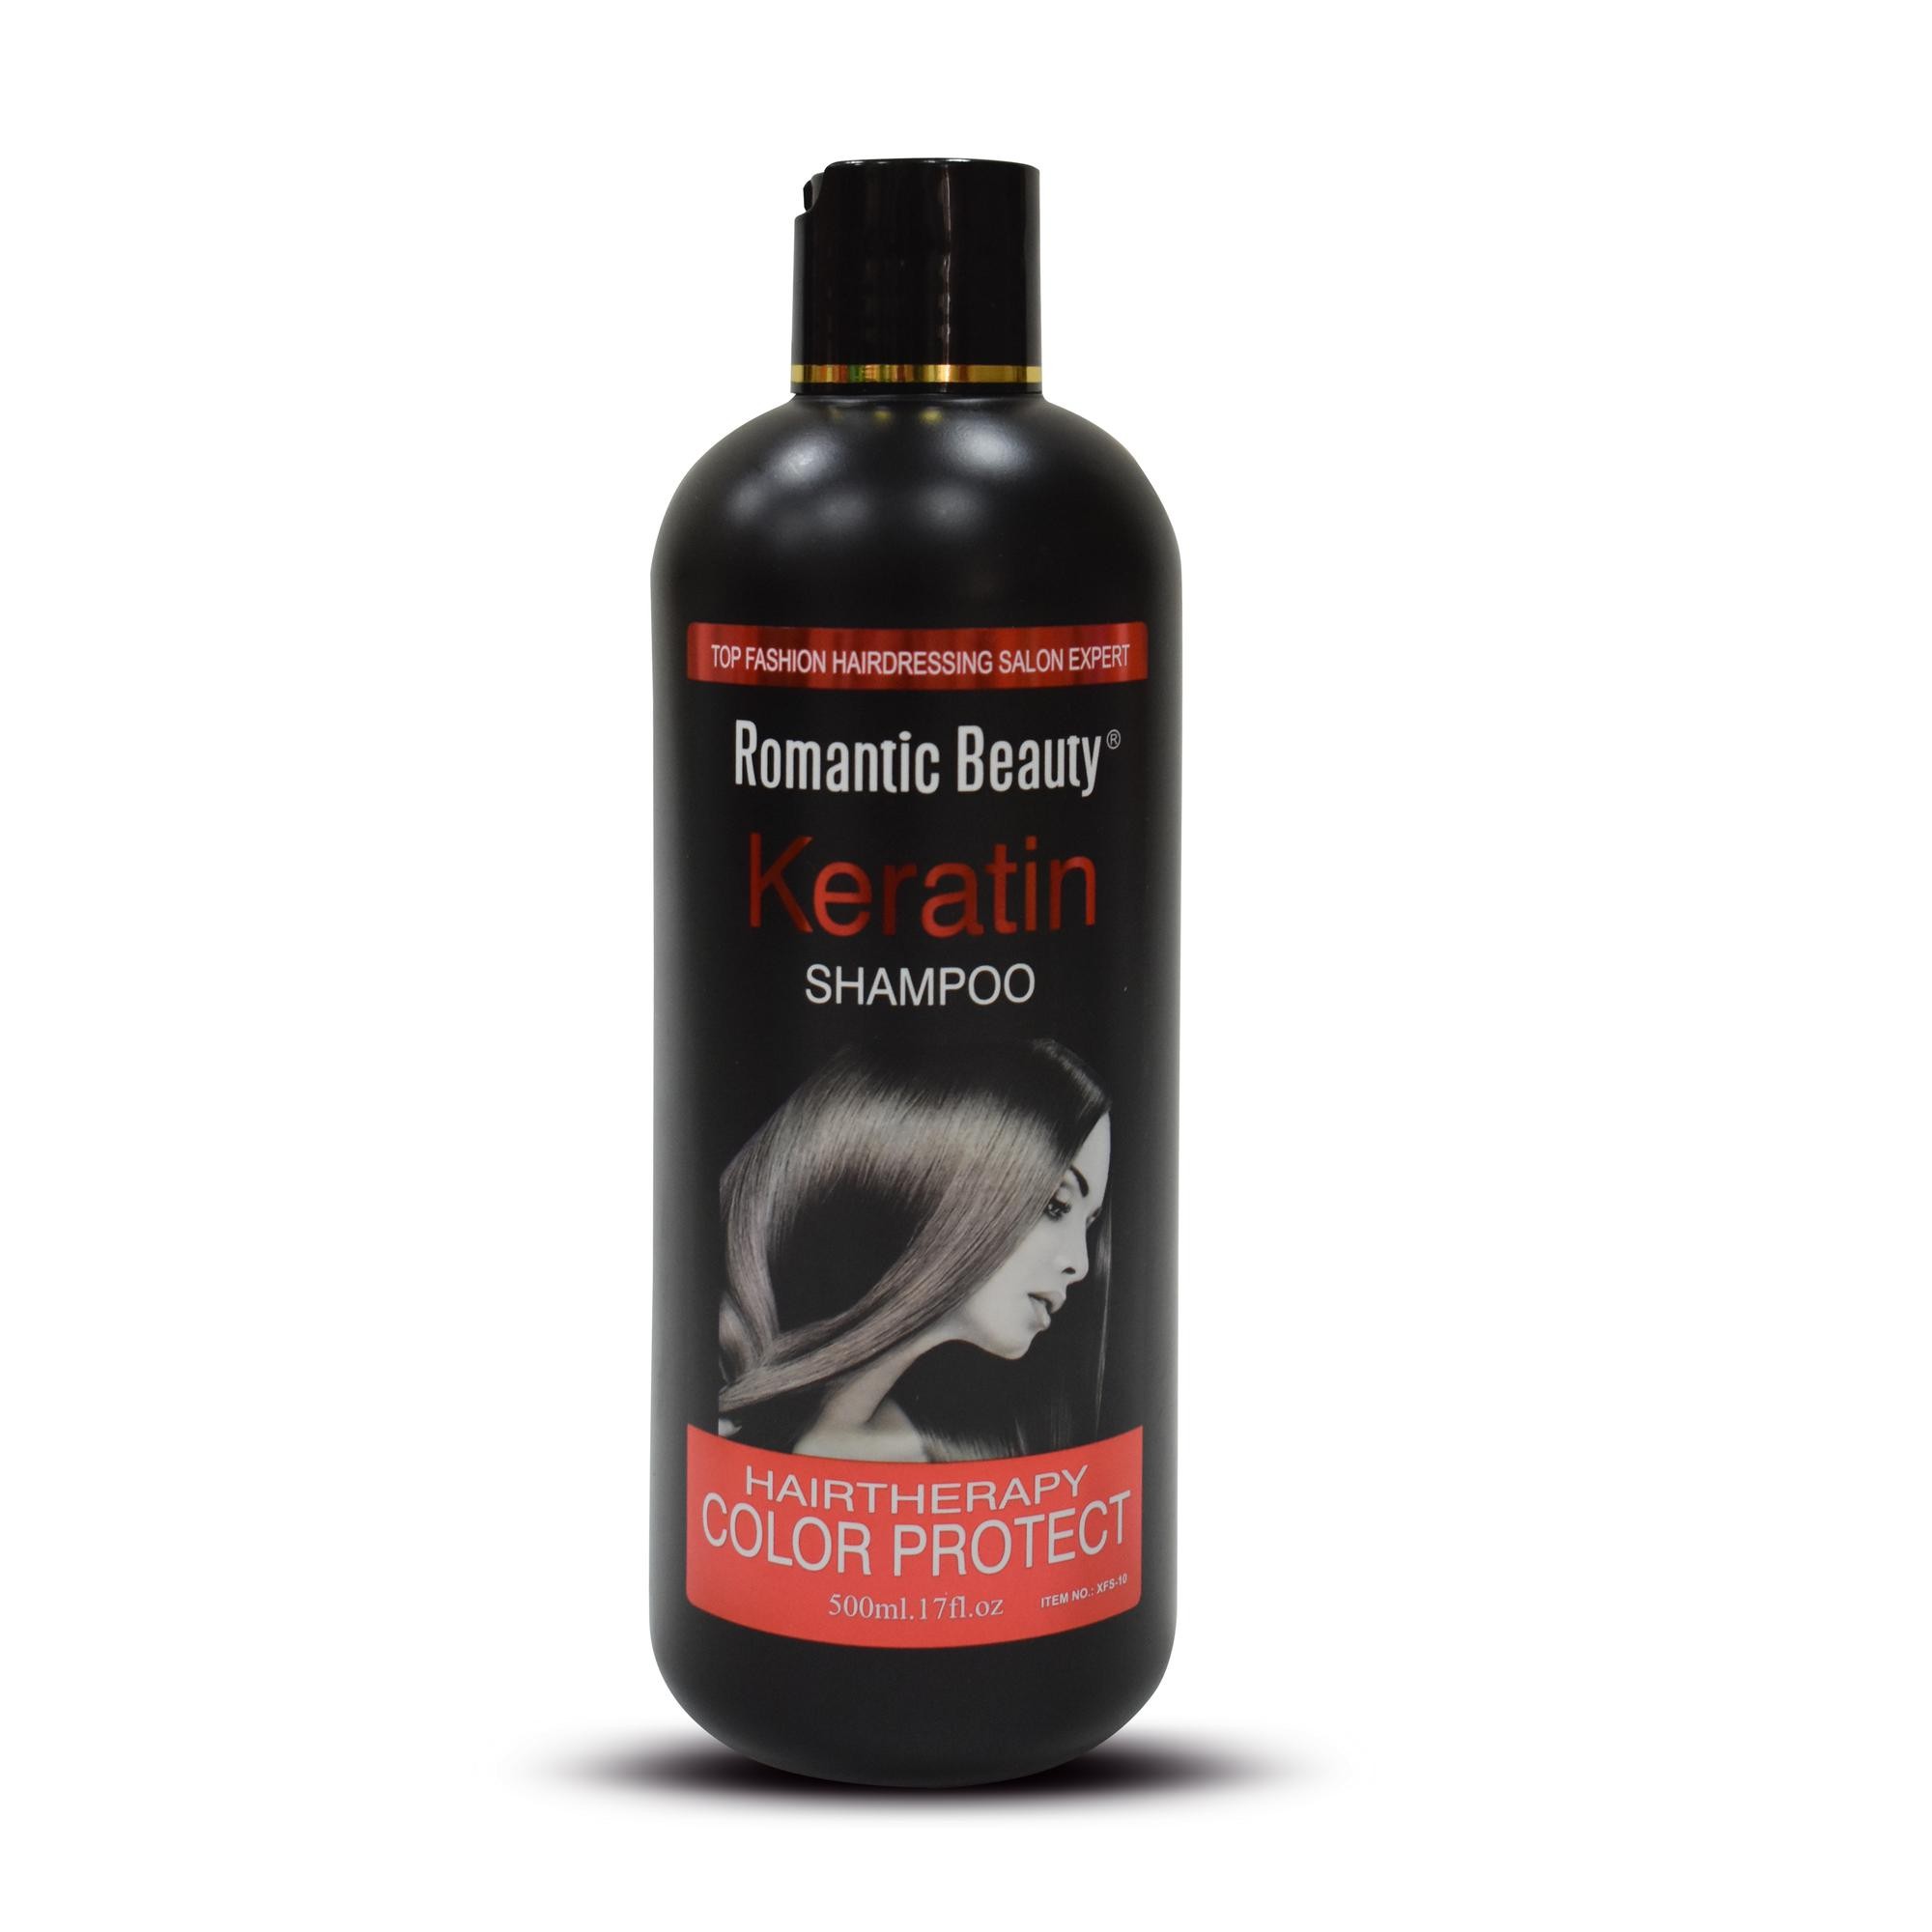 HAIRTHERAPY. Keratin Hair Shampoo – color protection. 500ML.